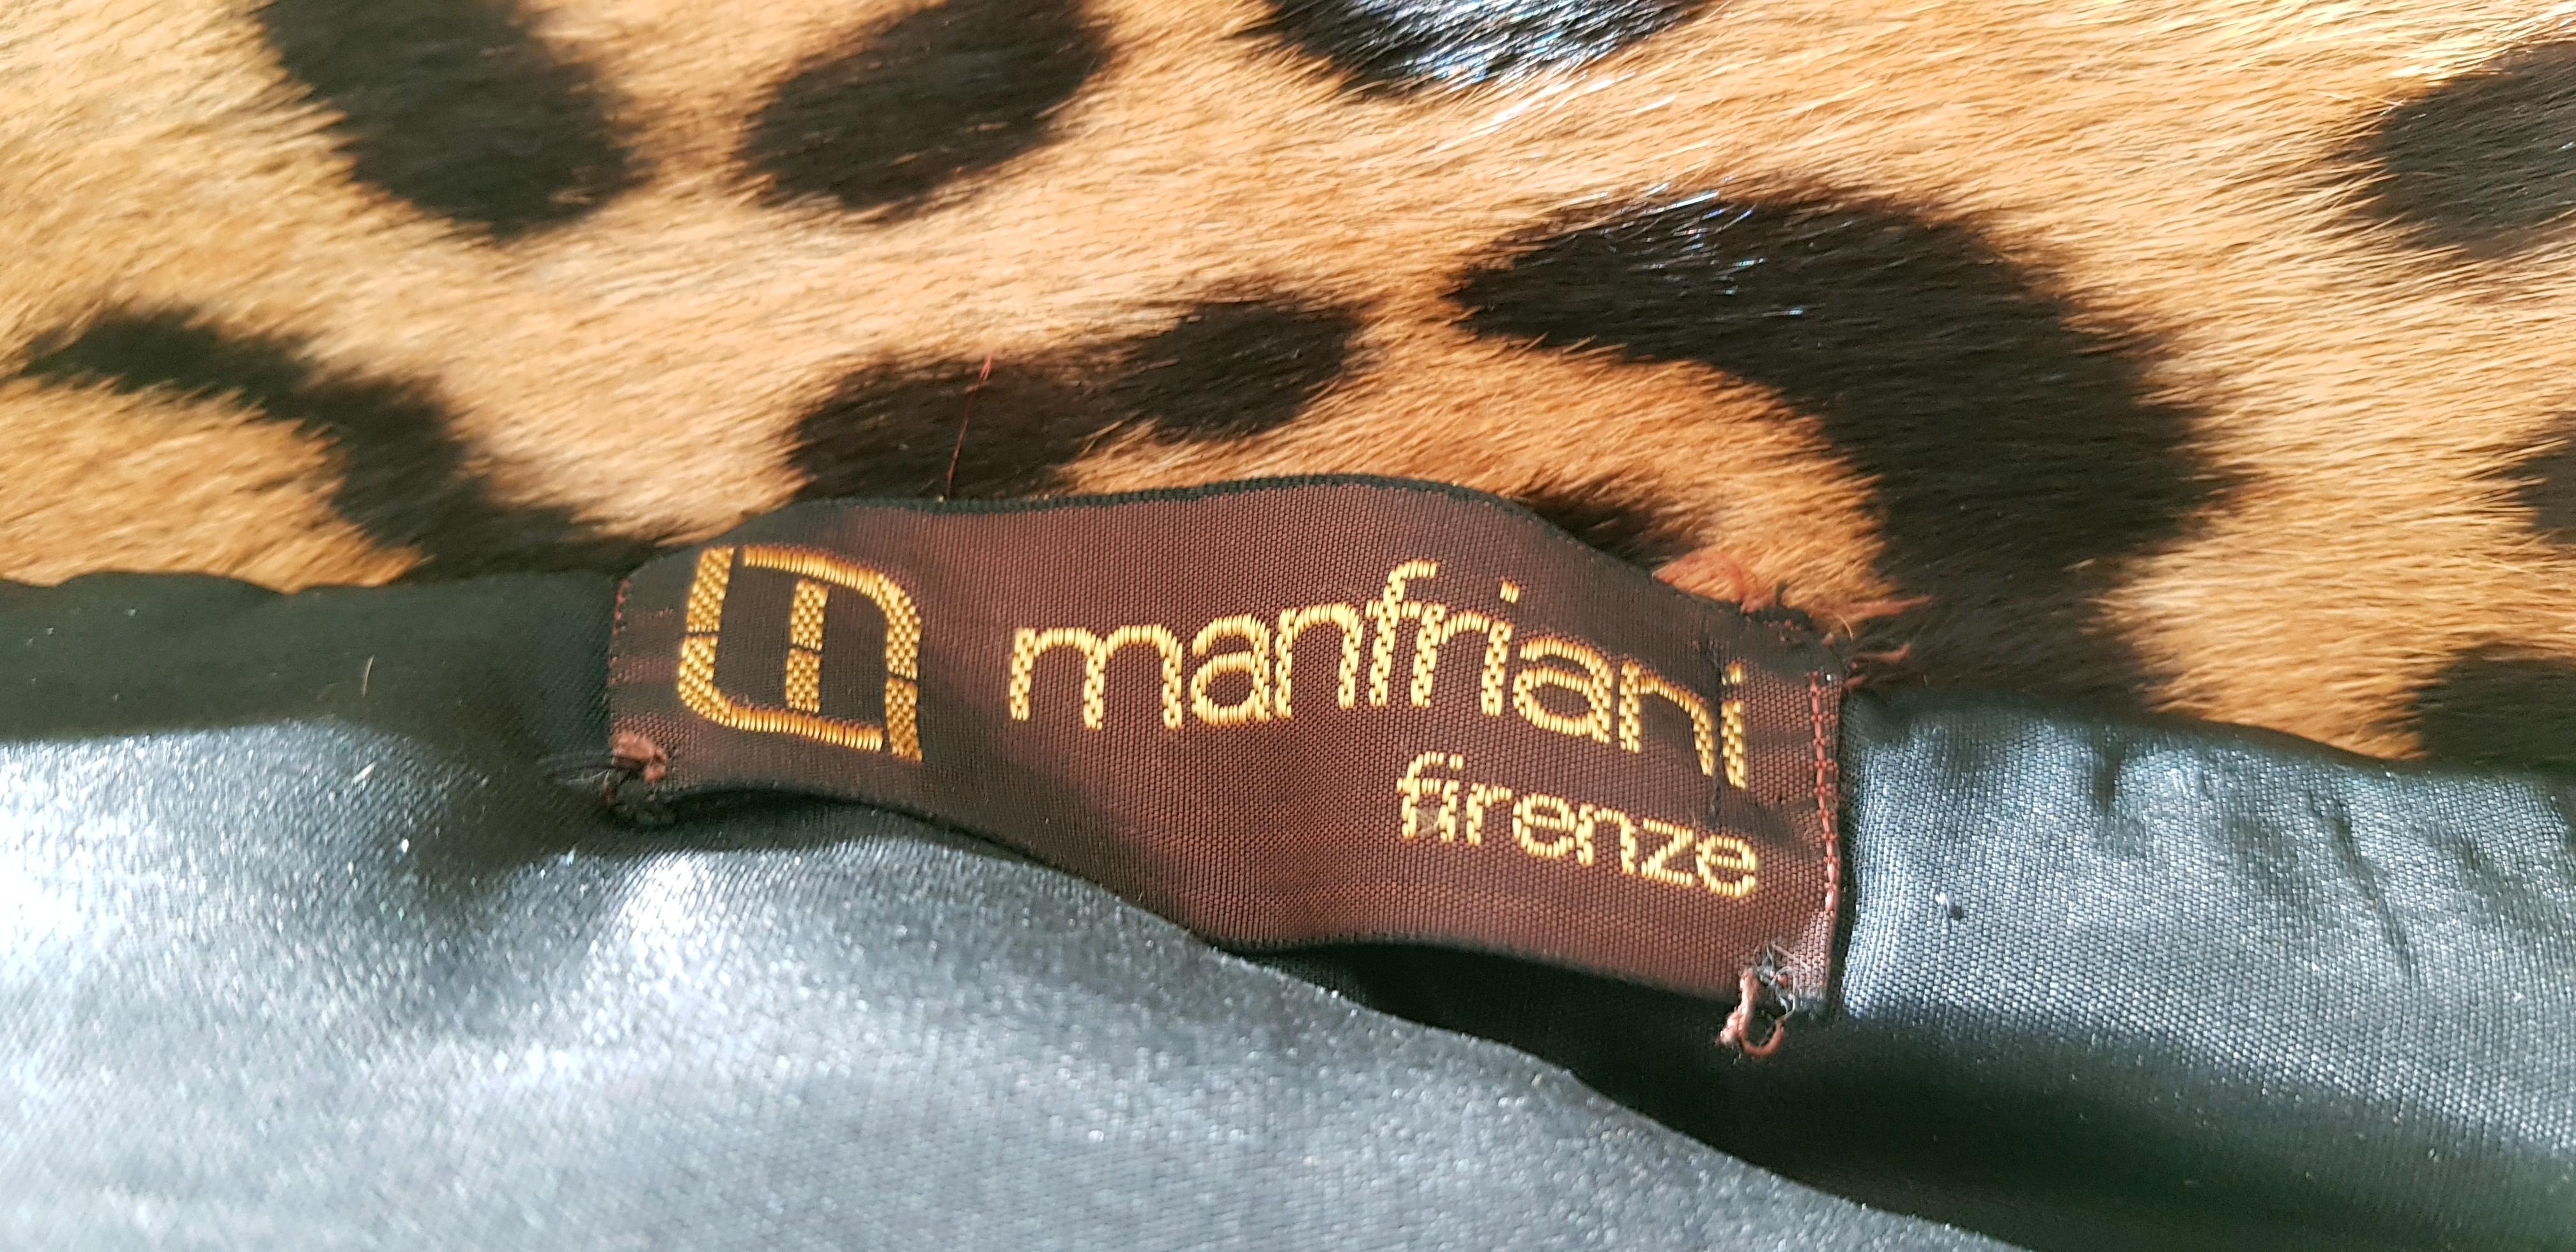 Haute Couture MANFRIANI Florence Rare Wild Jaguar Fur (Pre-Ban) Coat. Unworn  For Sale 7